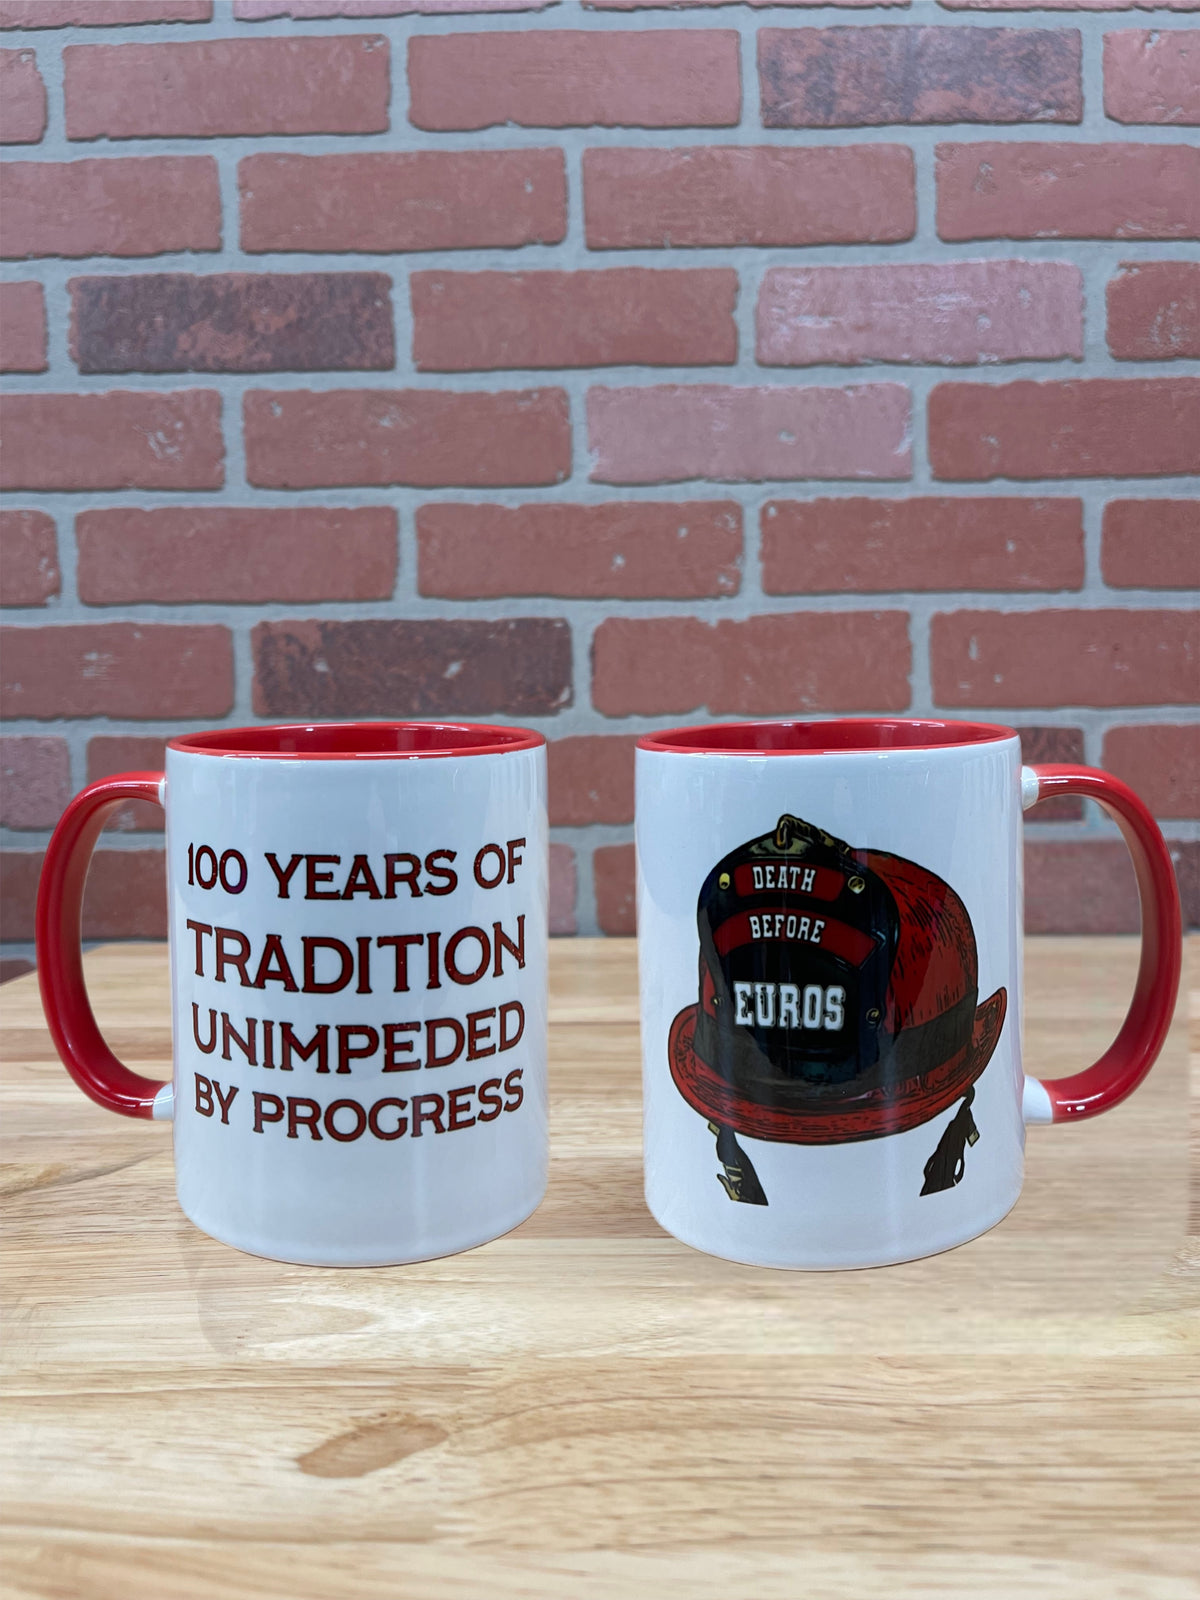 100 Years of Progress Mug The Daily Medic